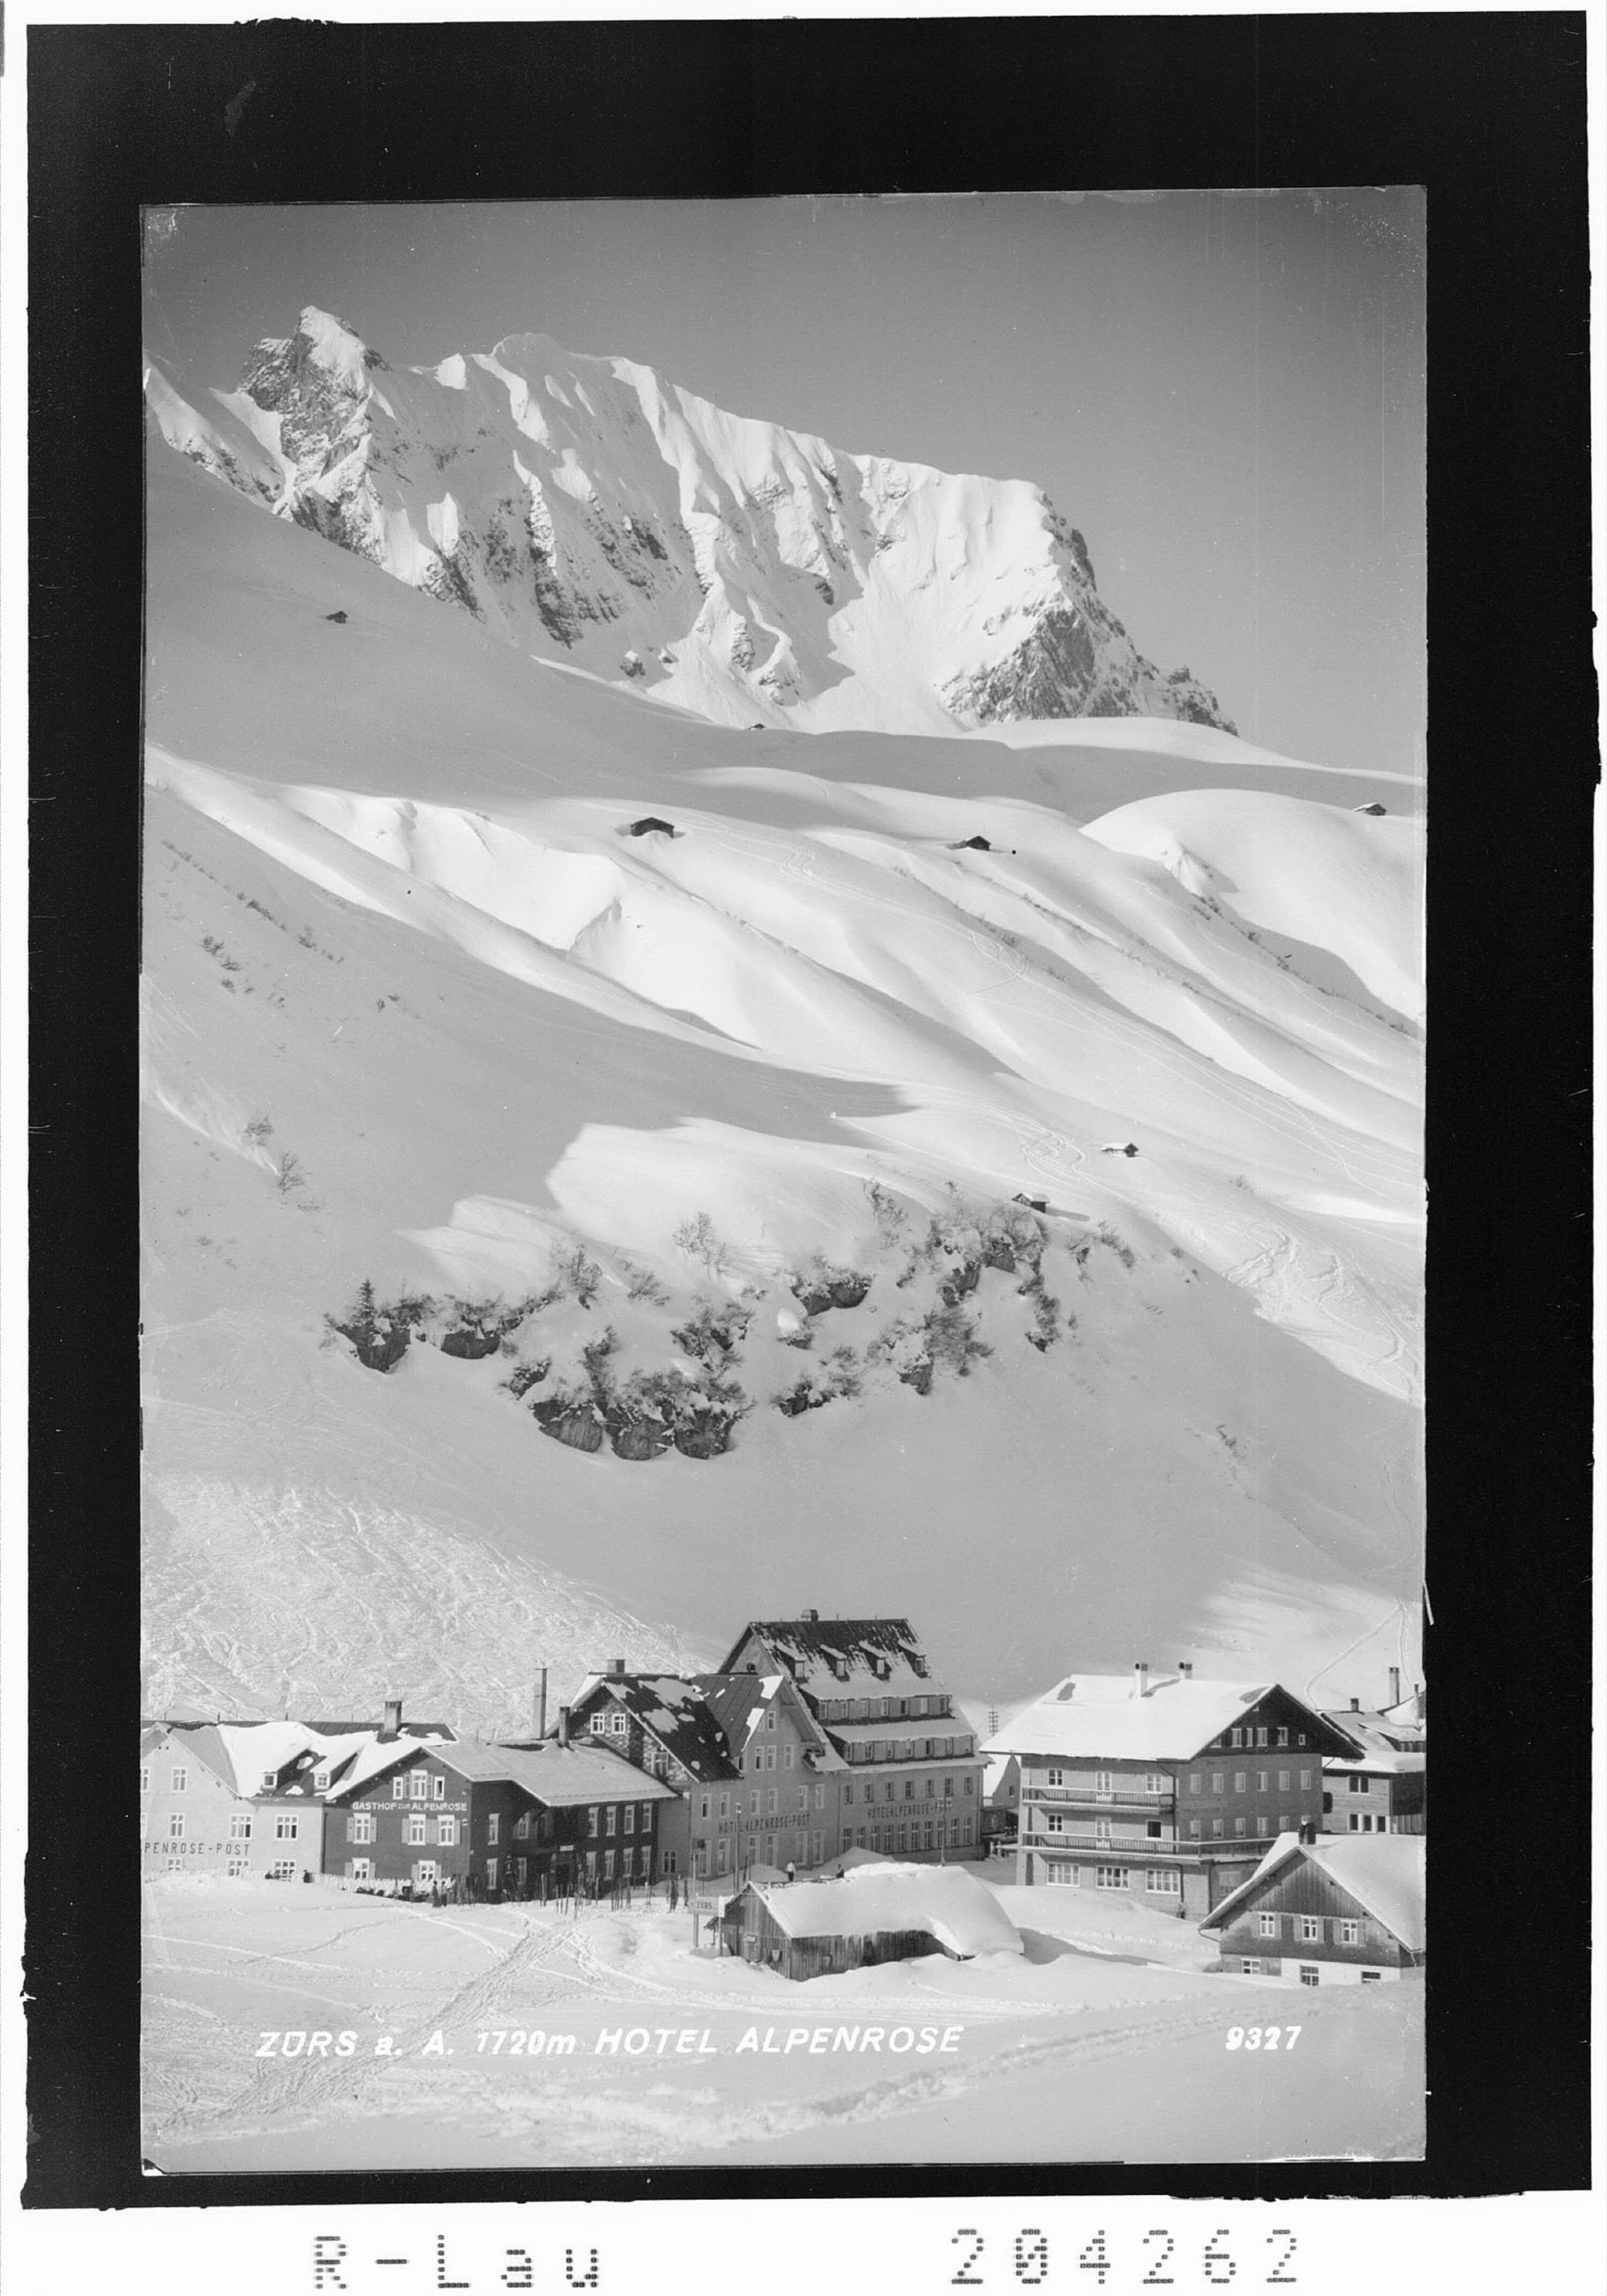 Zürs am Arlberg 1720 m / Hotel Alpenrose></div>


    <hr>
    <div class=